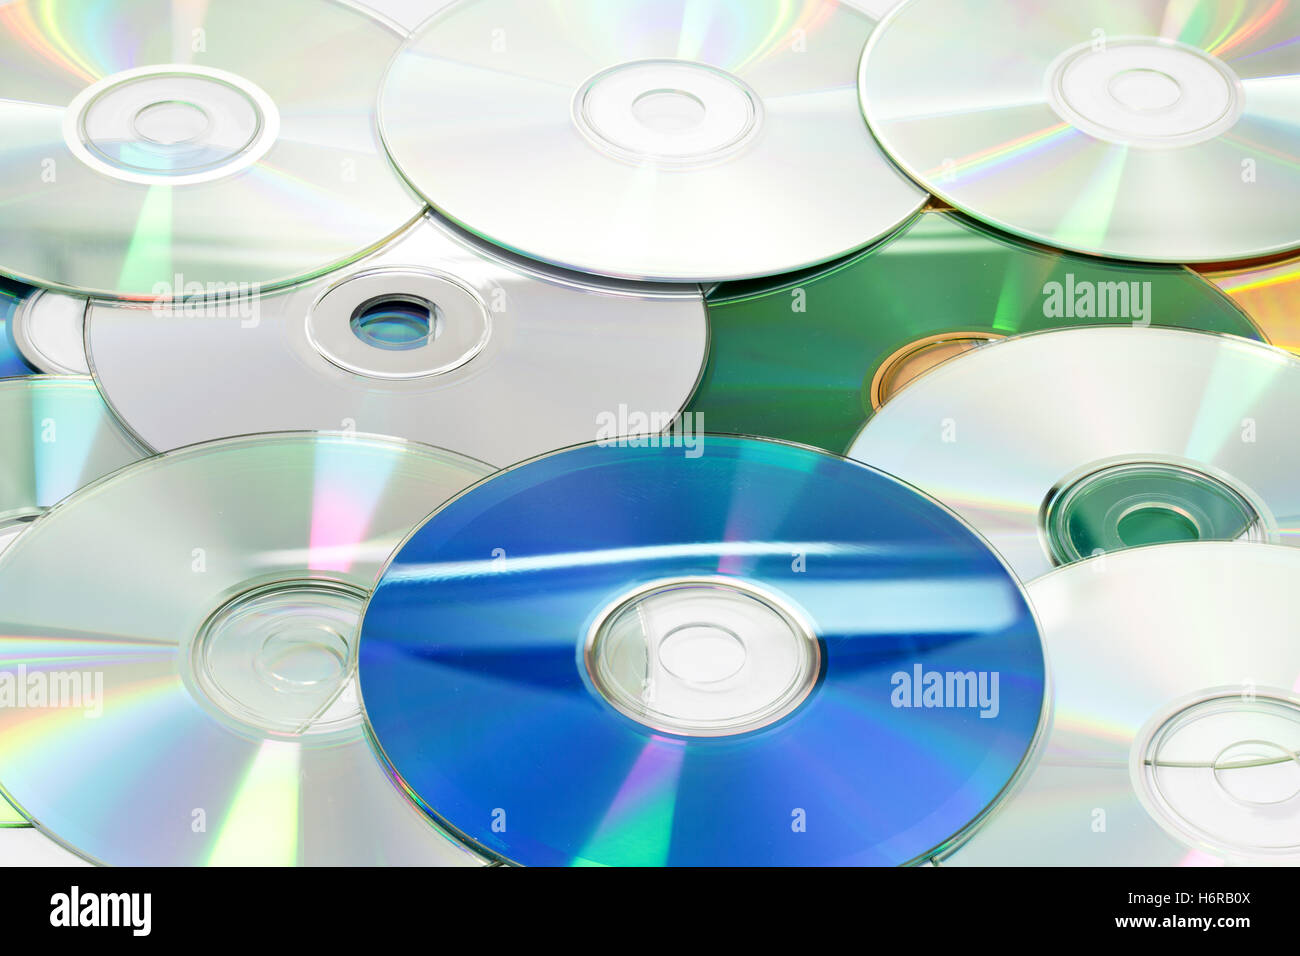 compact discs (cds) Stock Photo